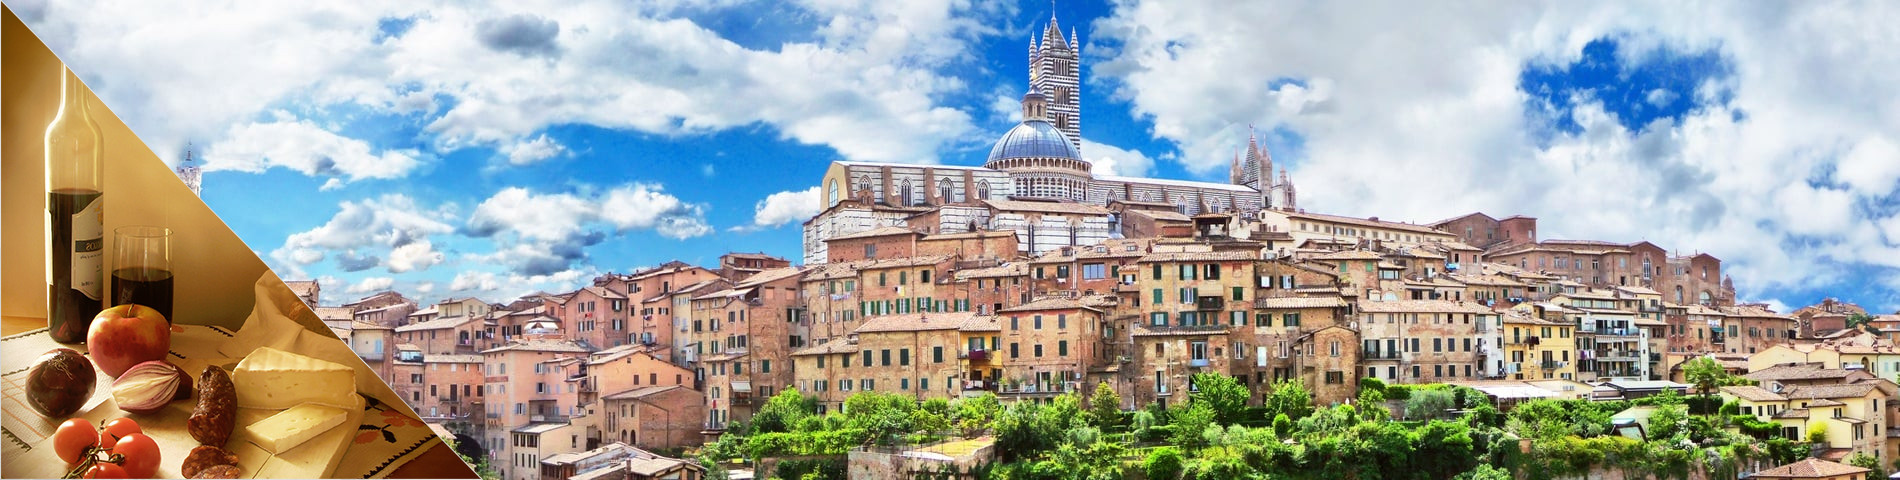 Siena - Italian & Culture